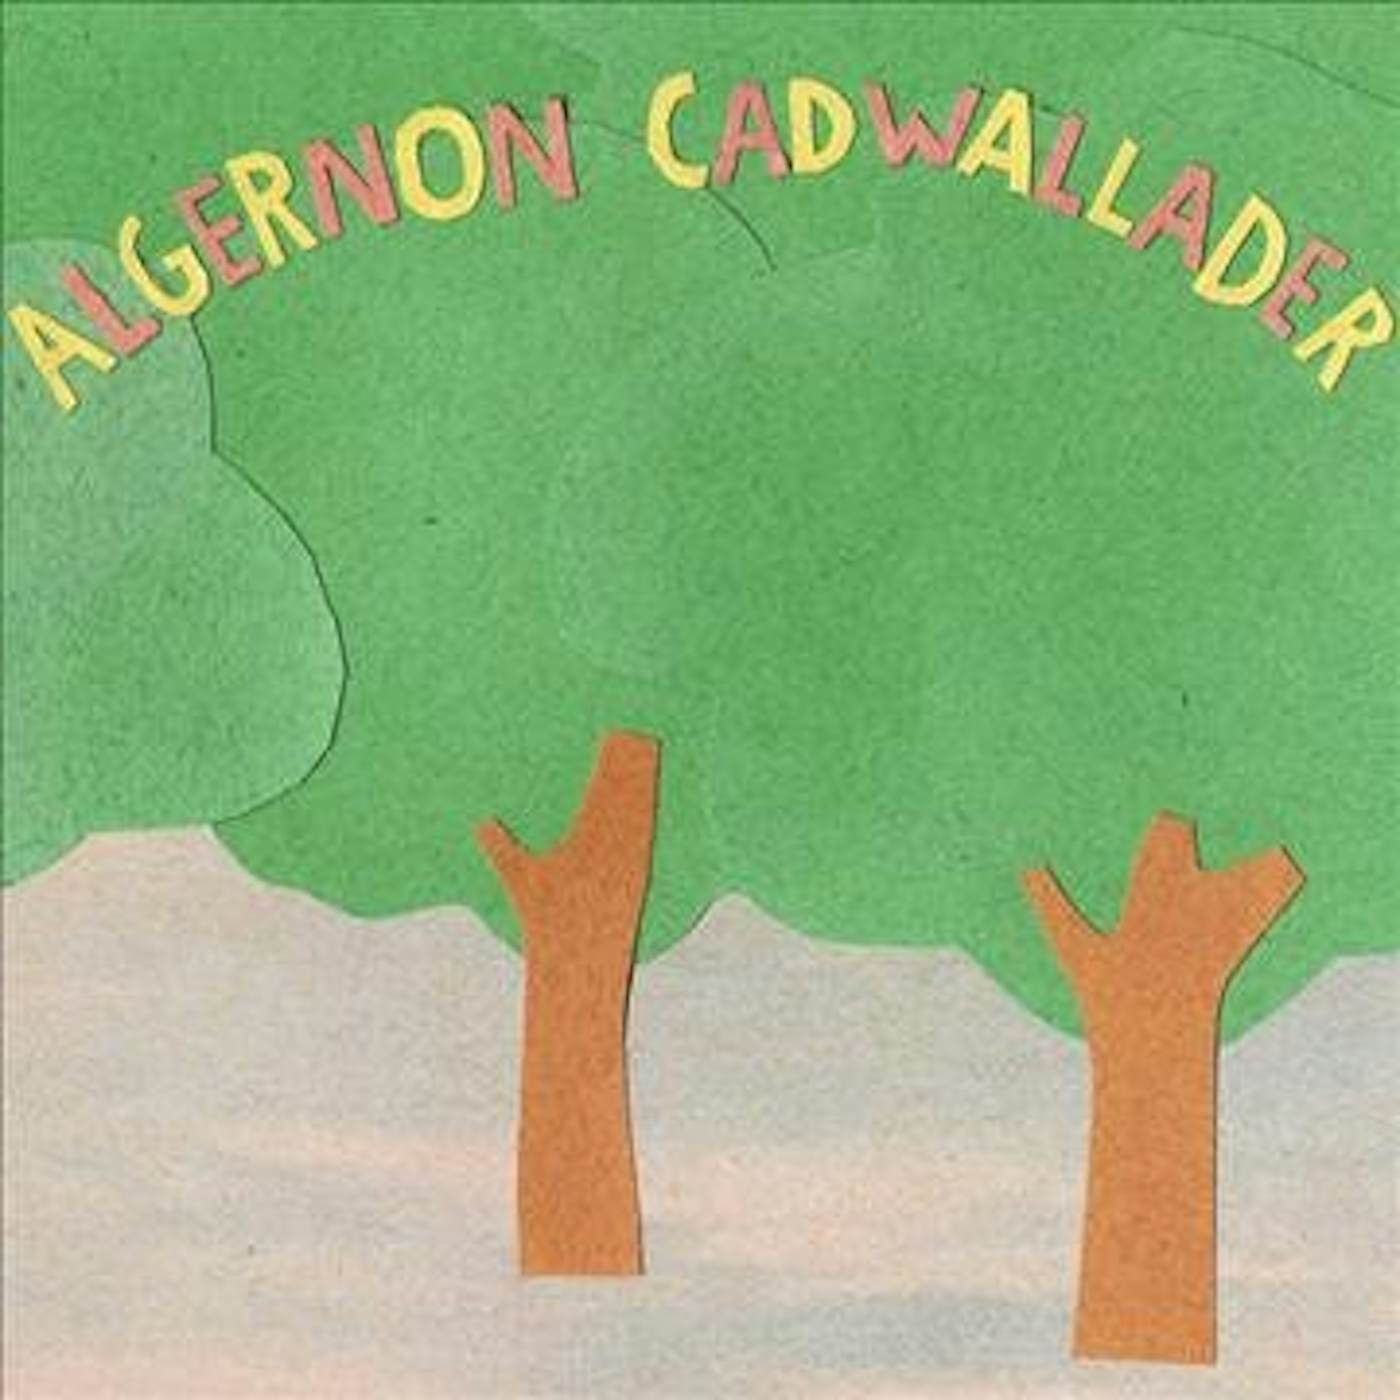 Algernon Cadwallader SOME KIND OF CADWALLADER Vinyl Record